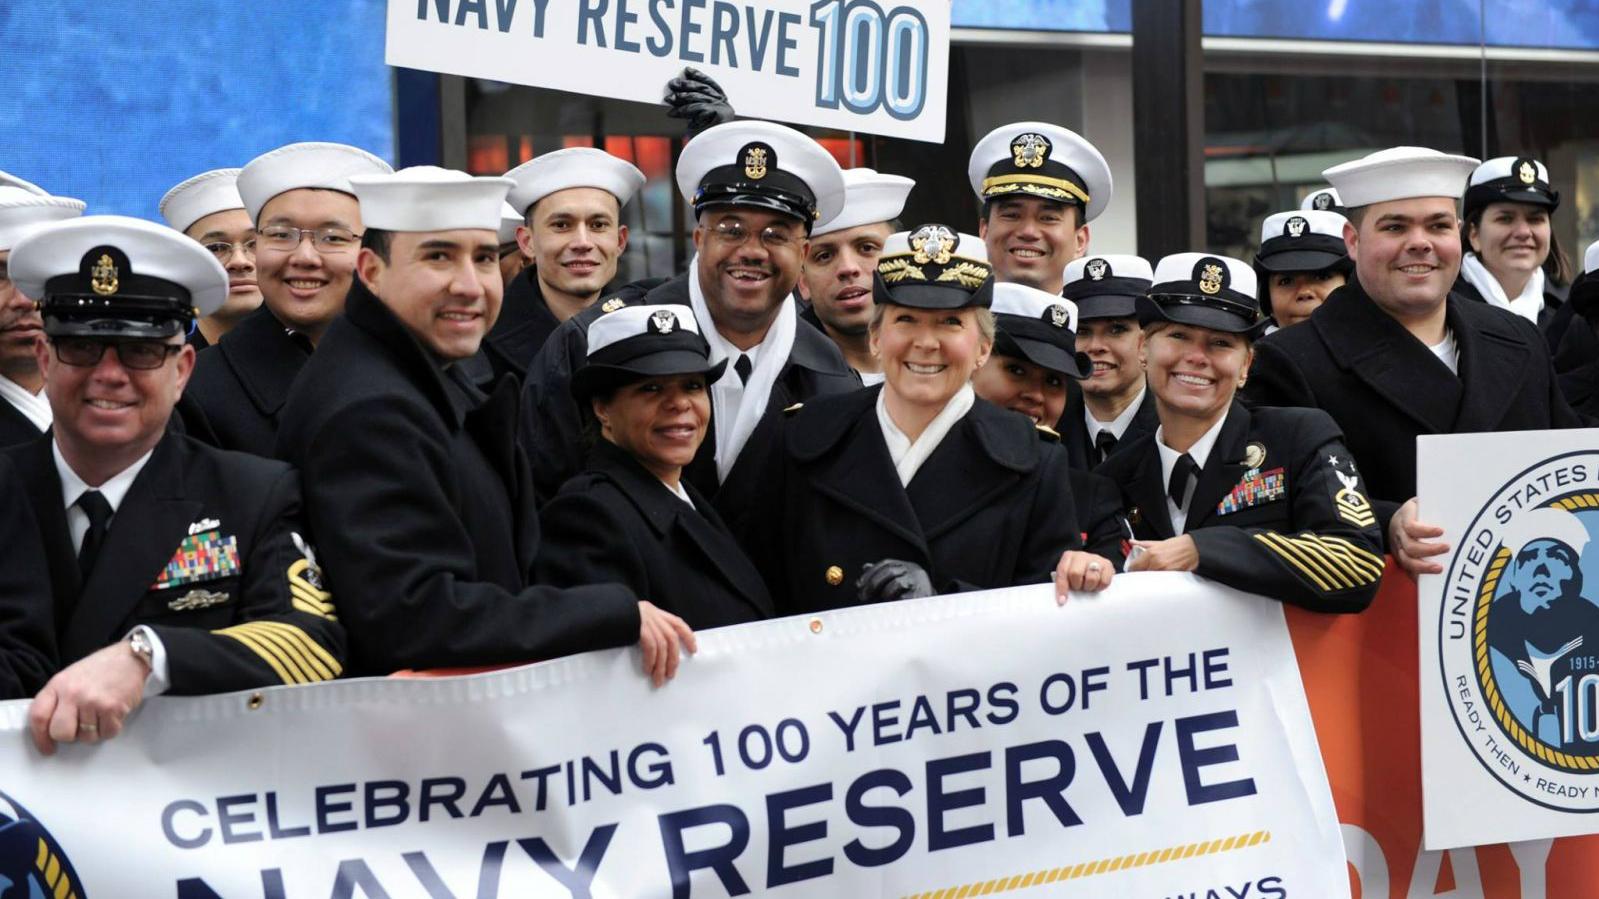 Navy Reserve 100th Anniversary